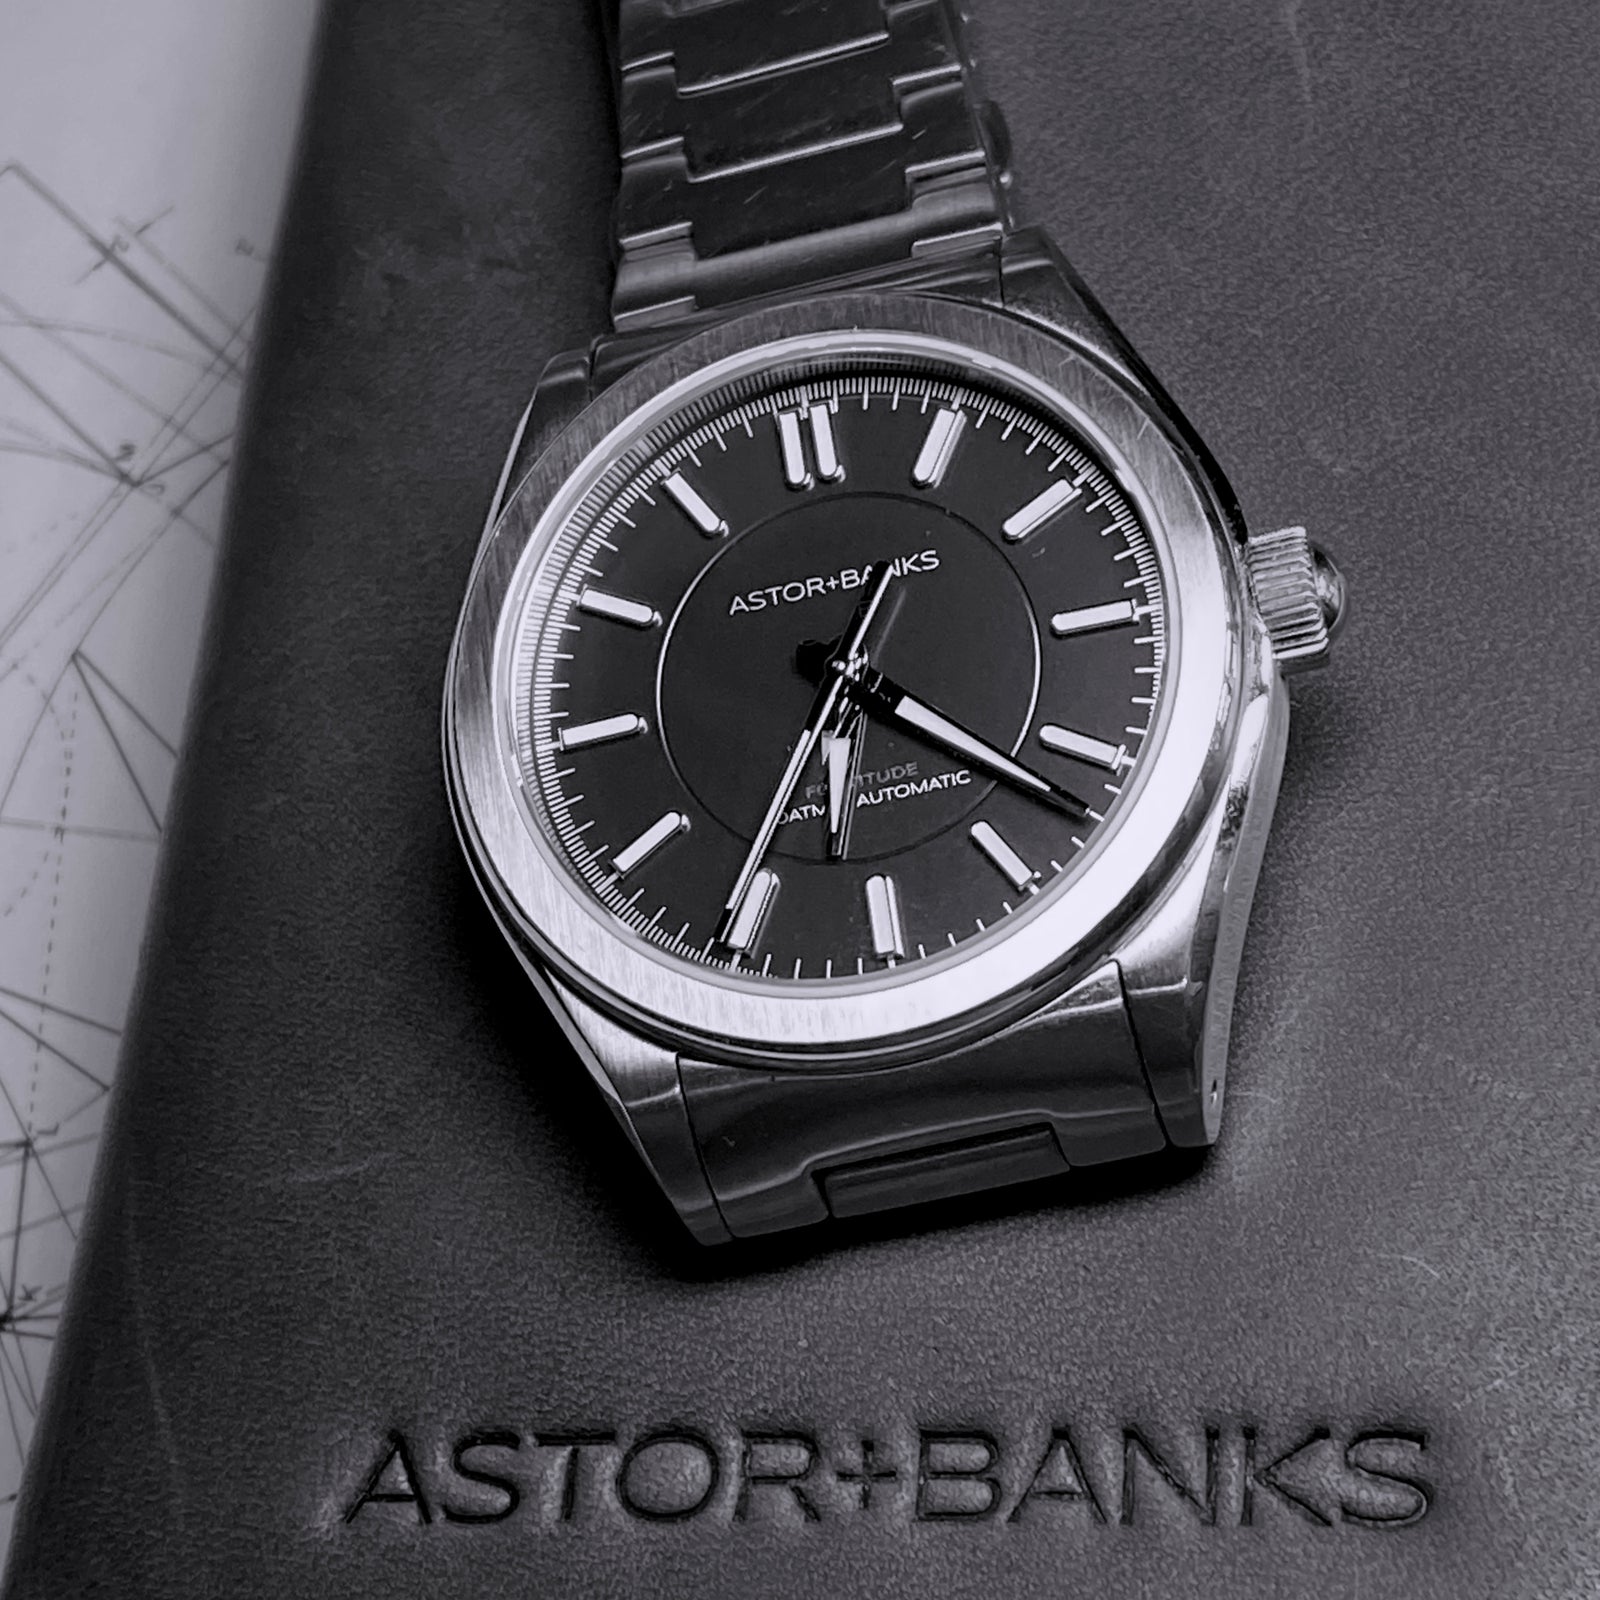 Astor+Banks - Fortitude Lite